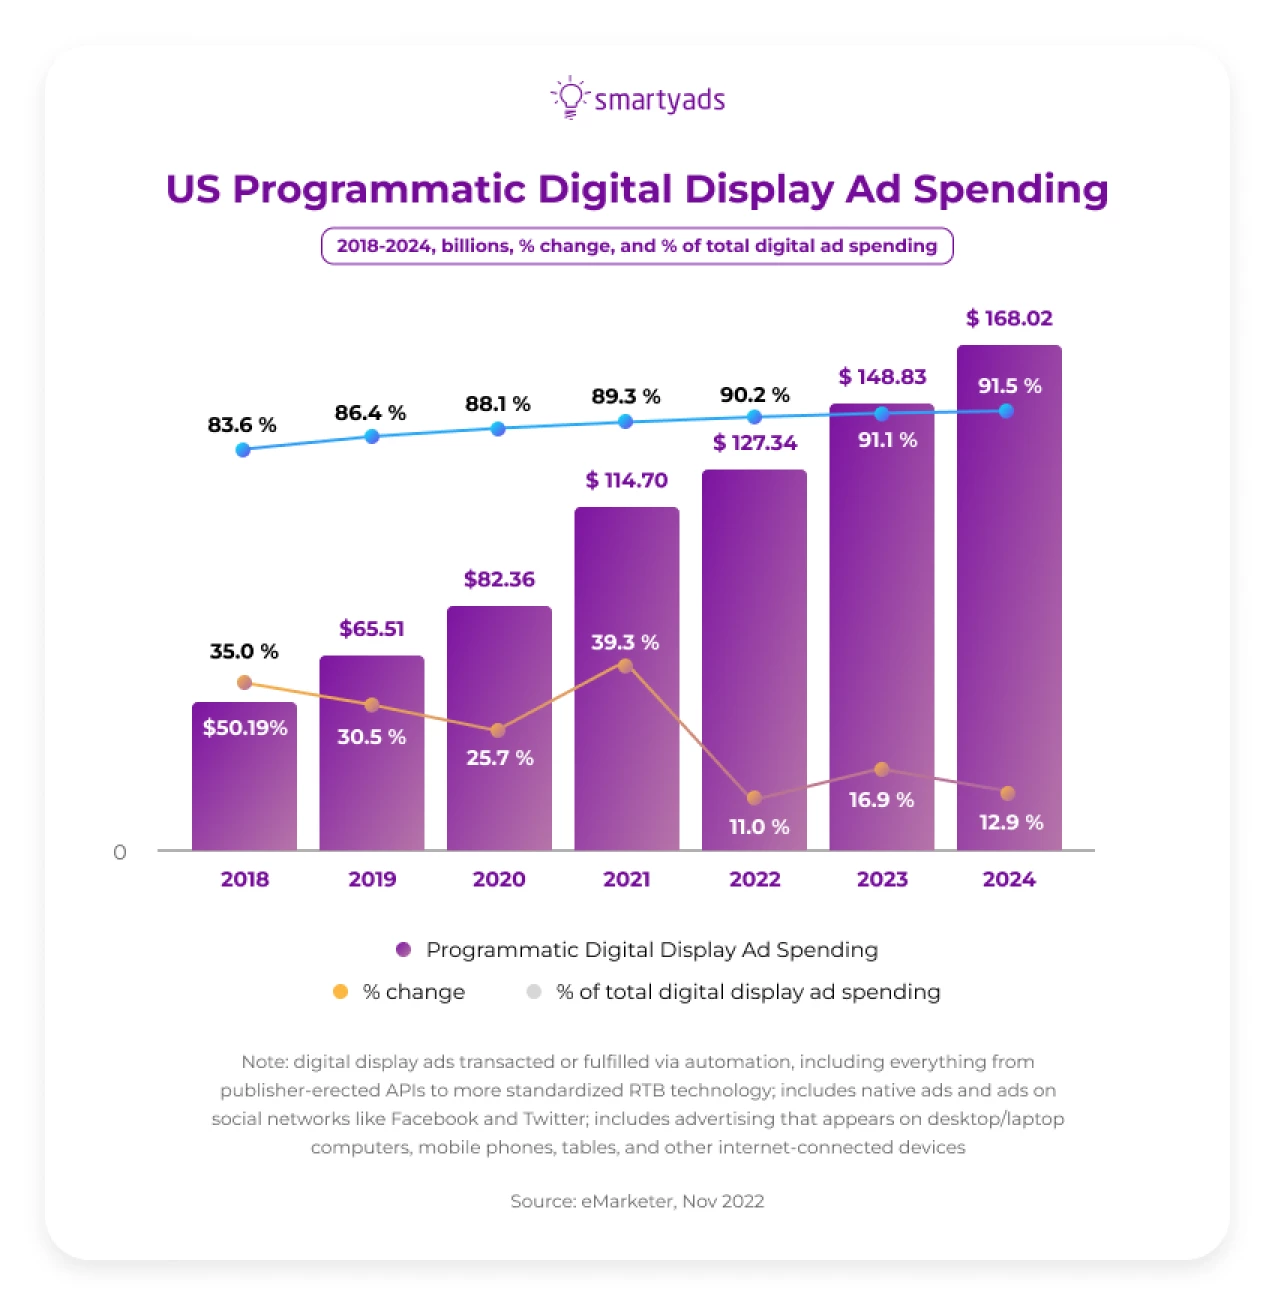 US Programmatic Digital Display Ad Spending, 2018-2024